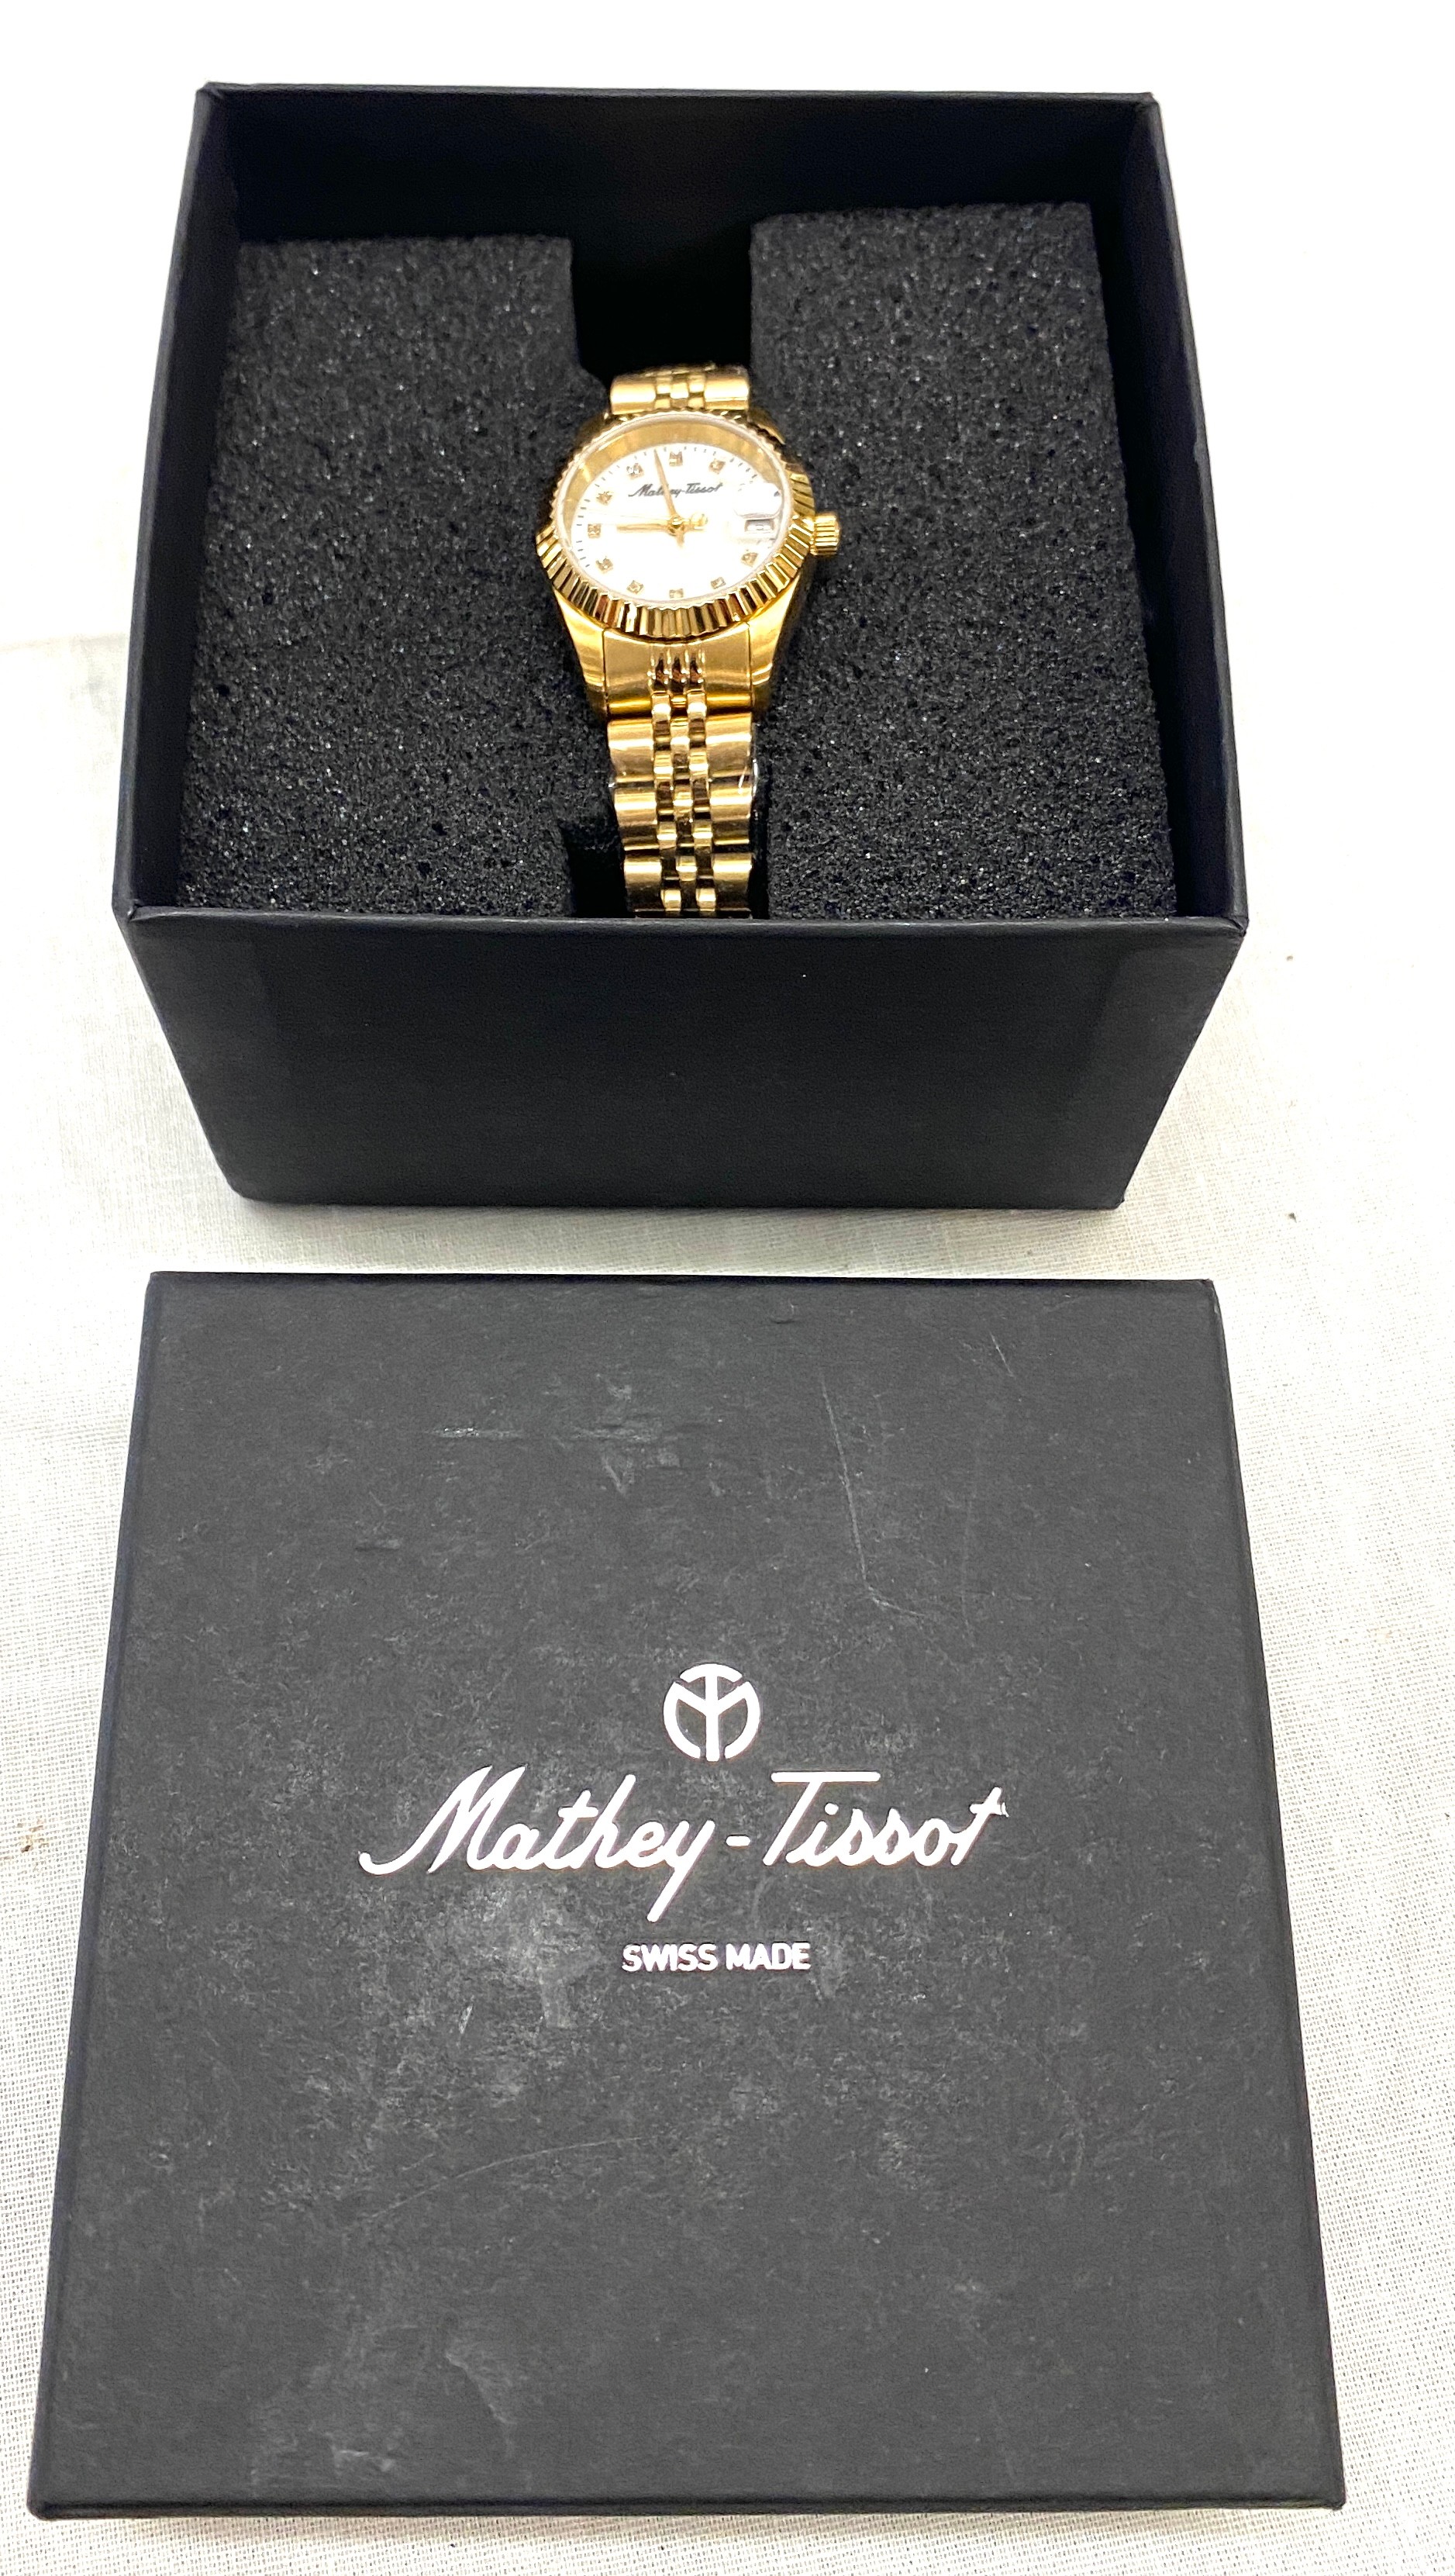 Mathey-tissot ladies wristwatch